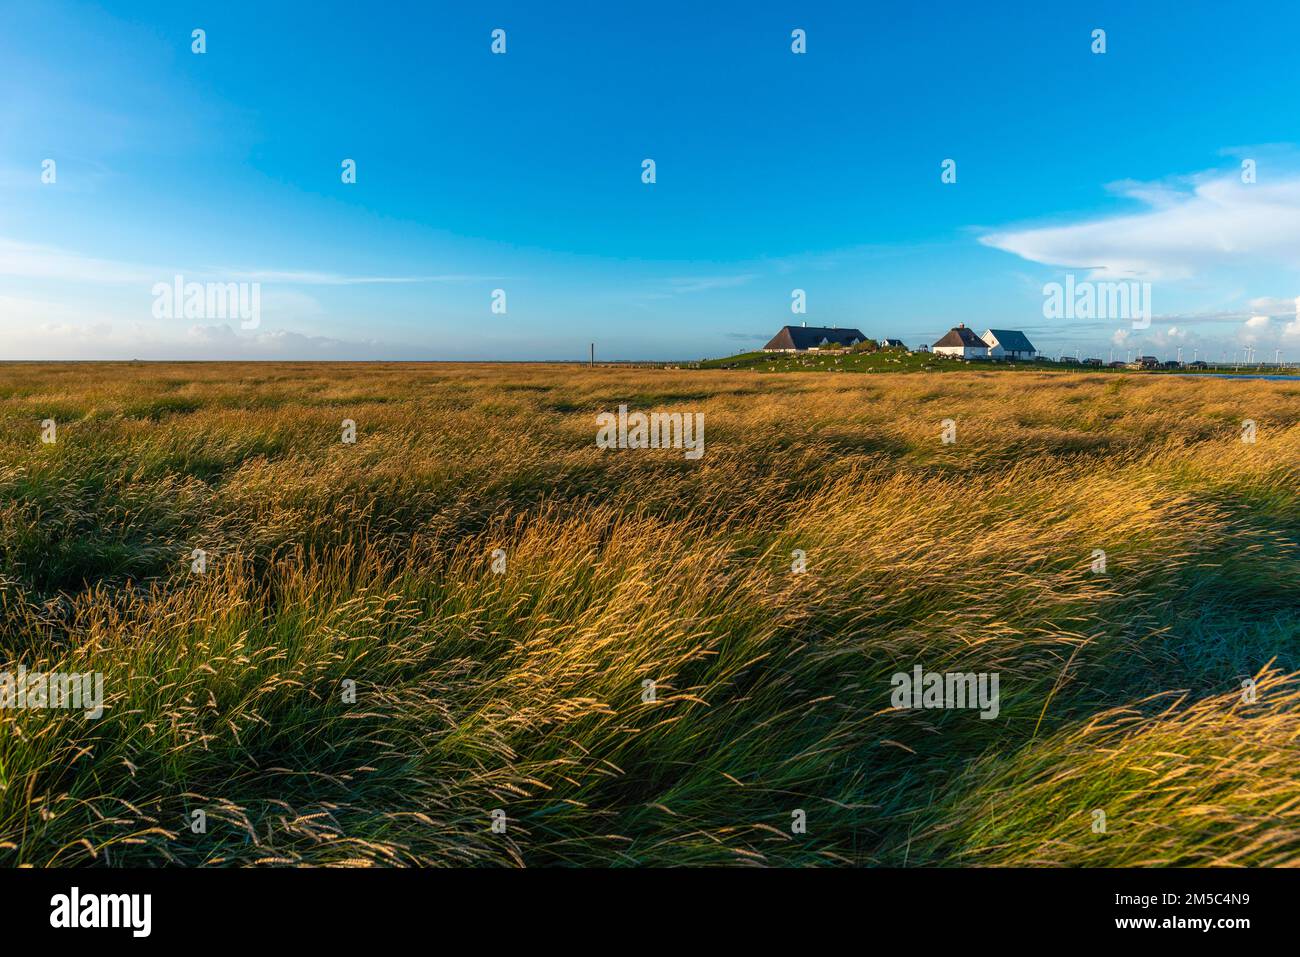 Hamburger Hallig, Reussenkoege, North Frisia, dwelling mound, reed houses, grasses, evening light, blue sky, Schleswig-Holstein, North Germany Stock Photo